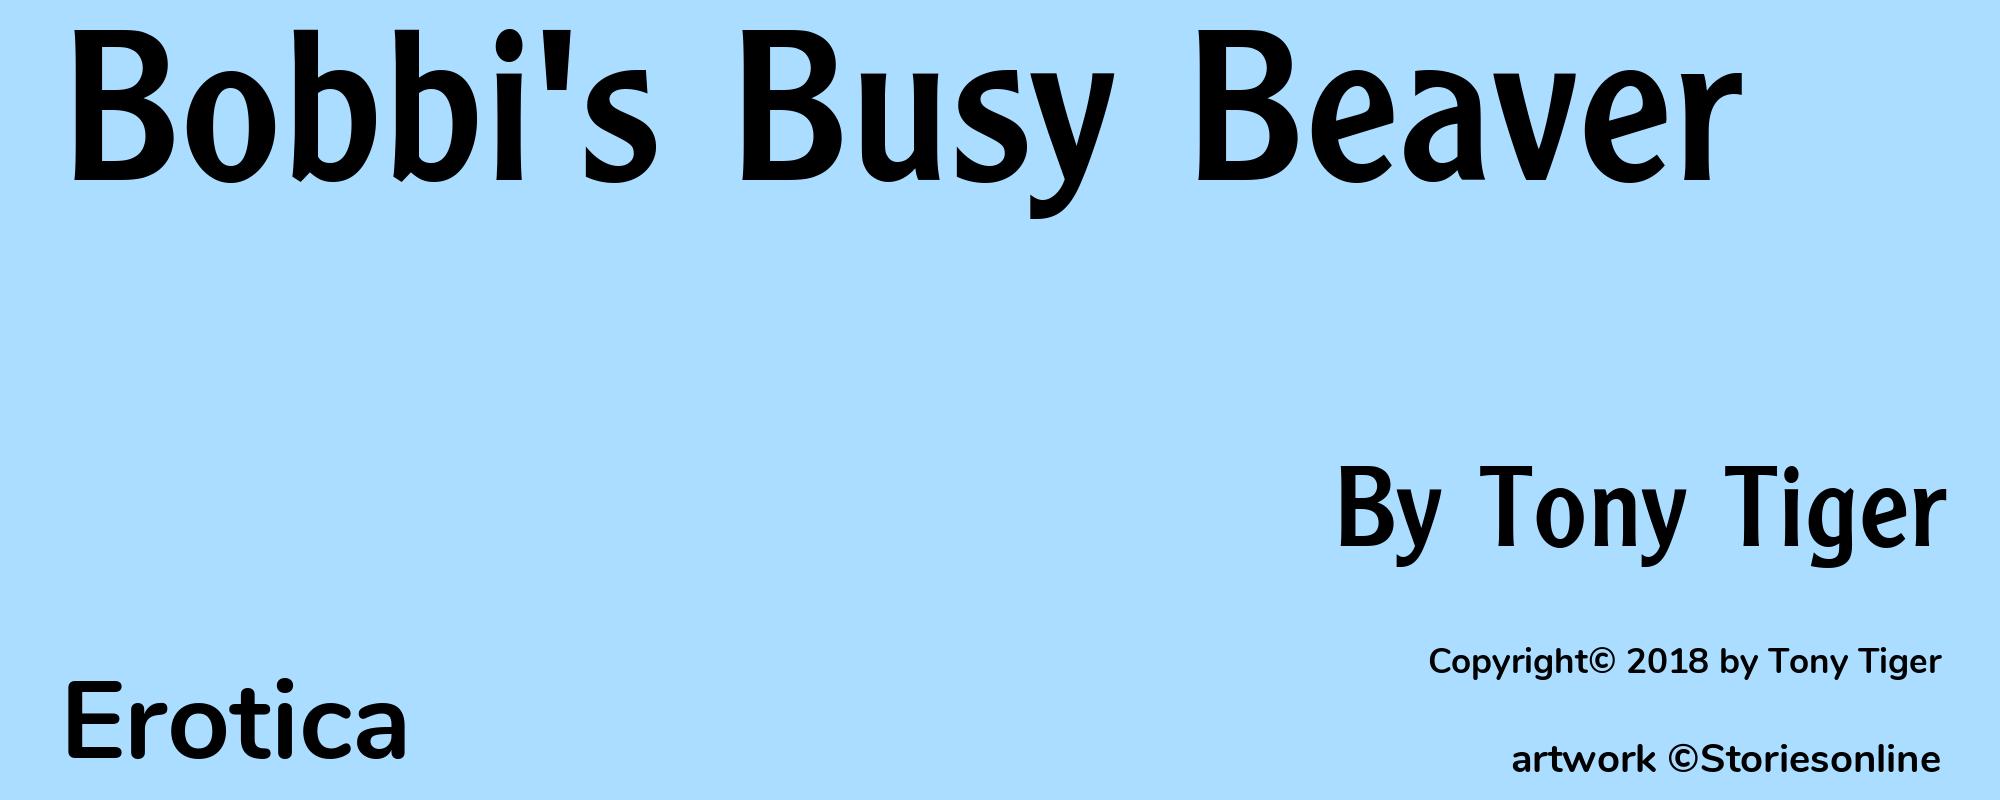 Bobbi's Busy Beaver - Cover